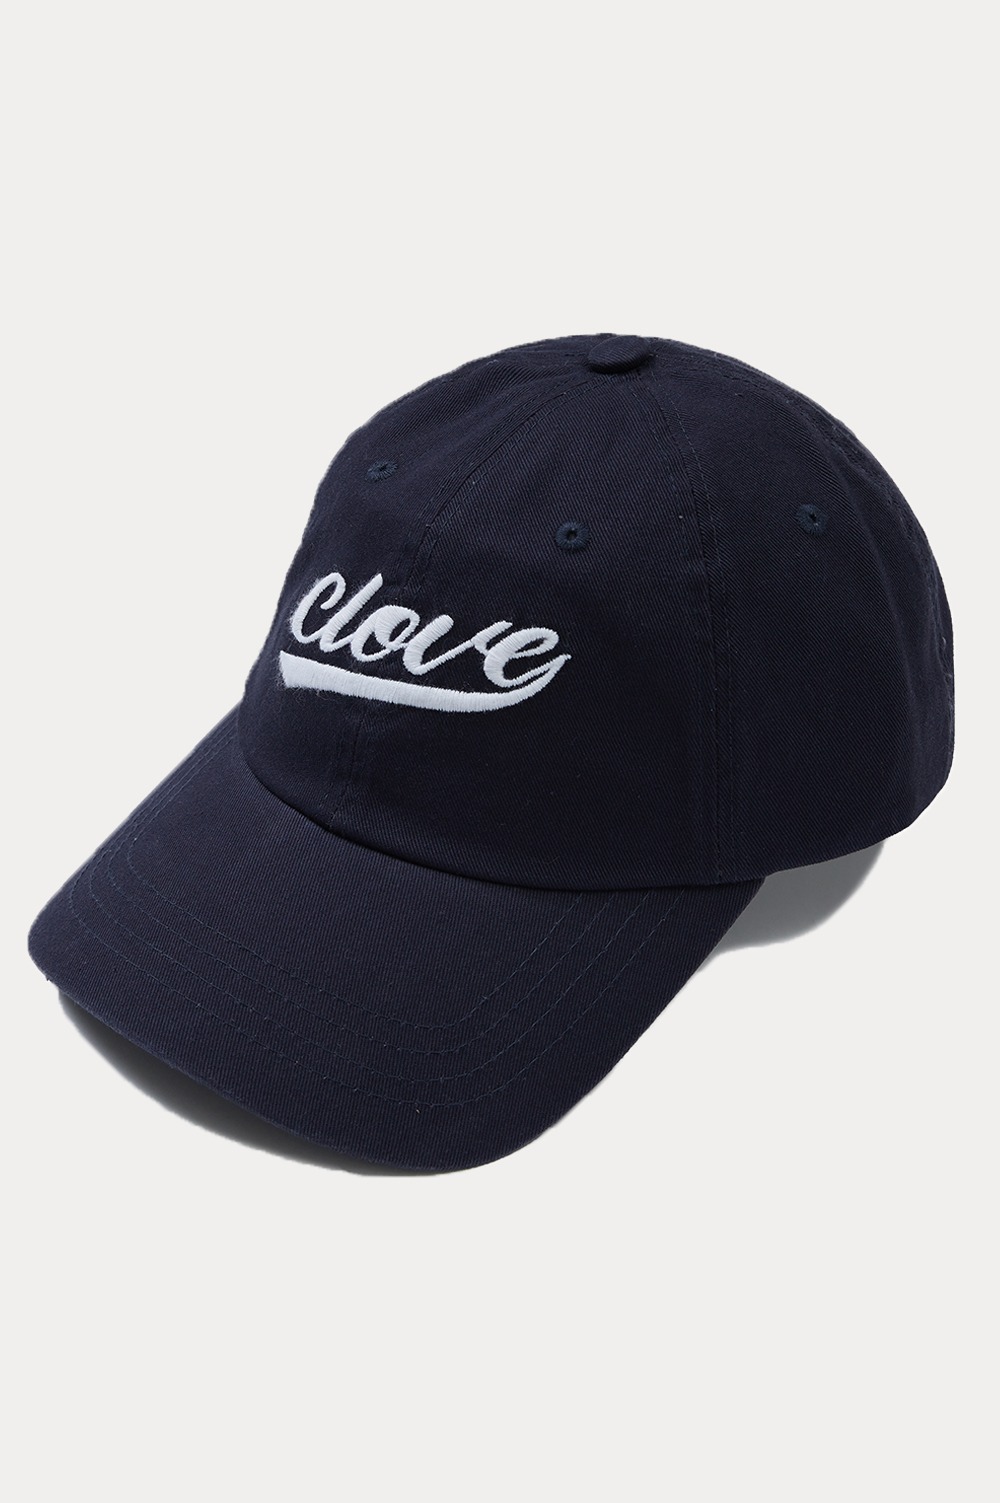 clove - Classic Logo Baseball Cap (Navy)